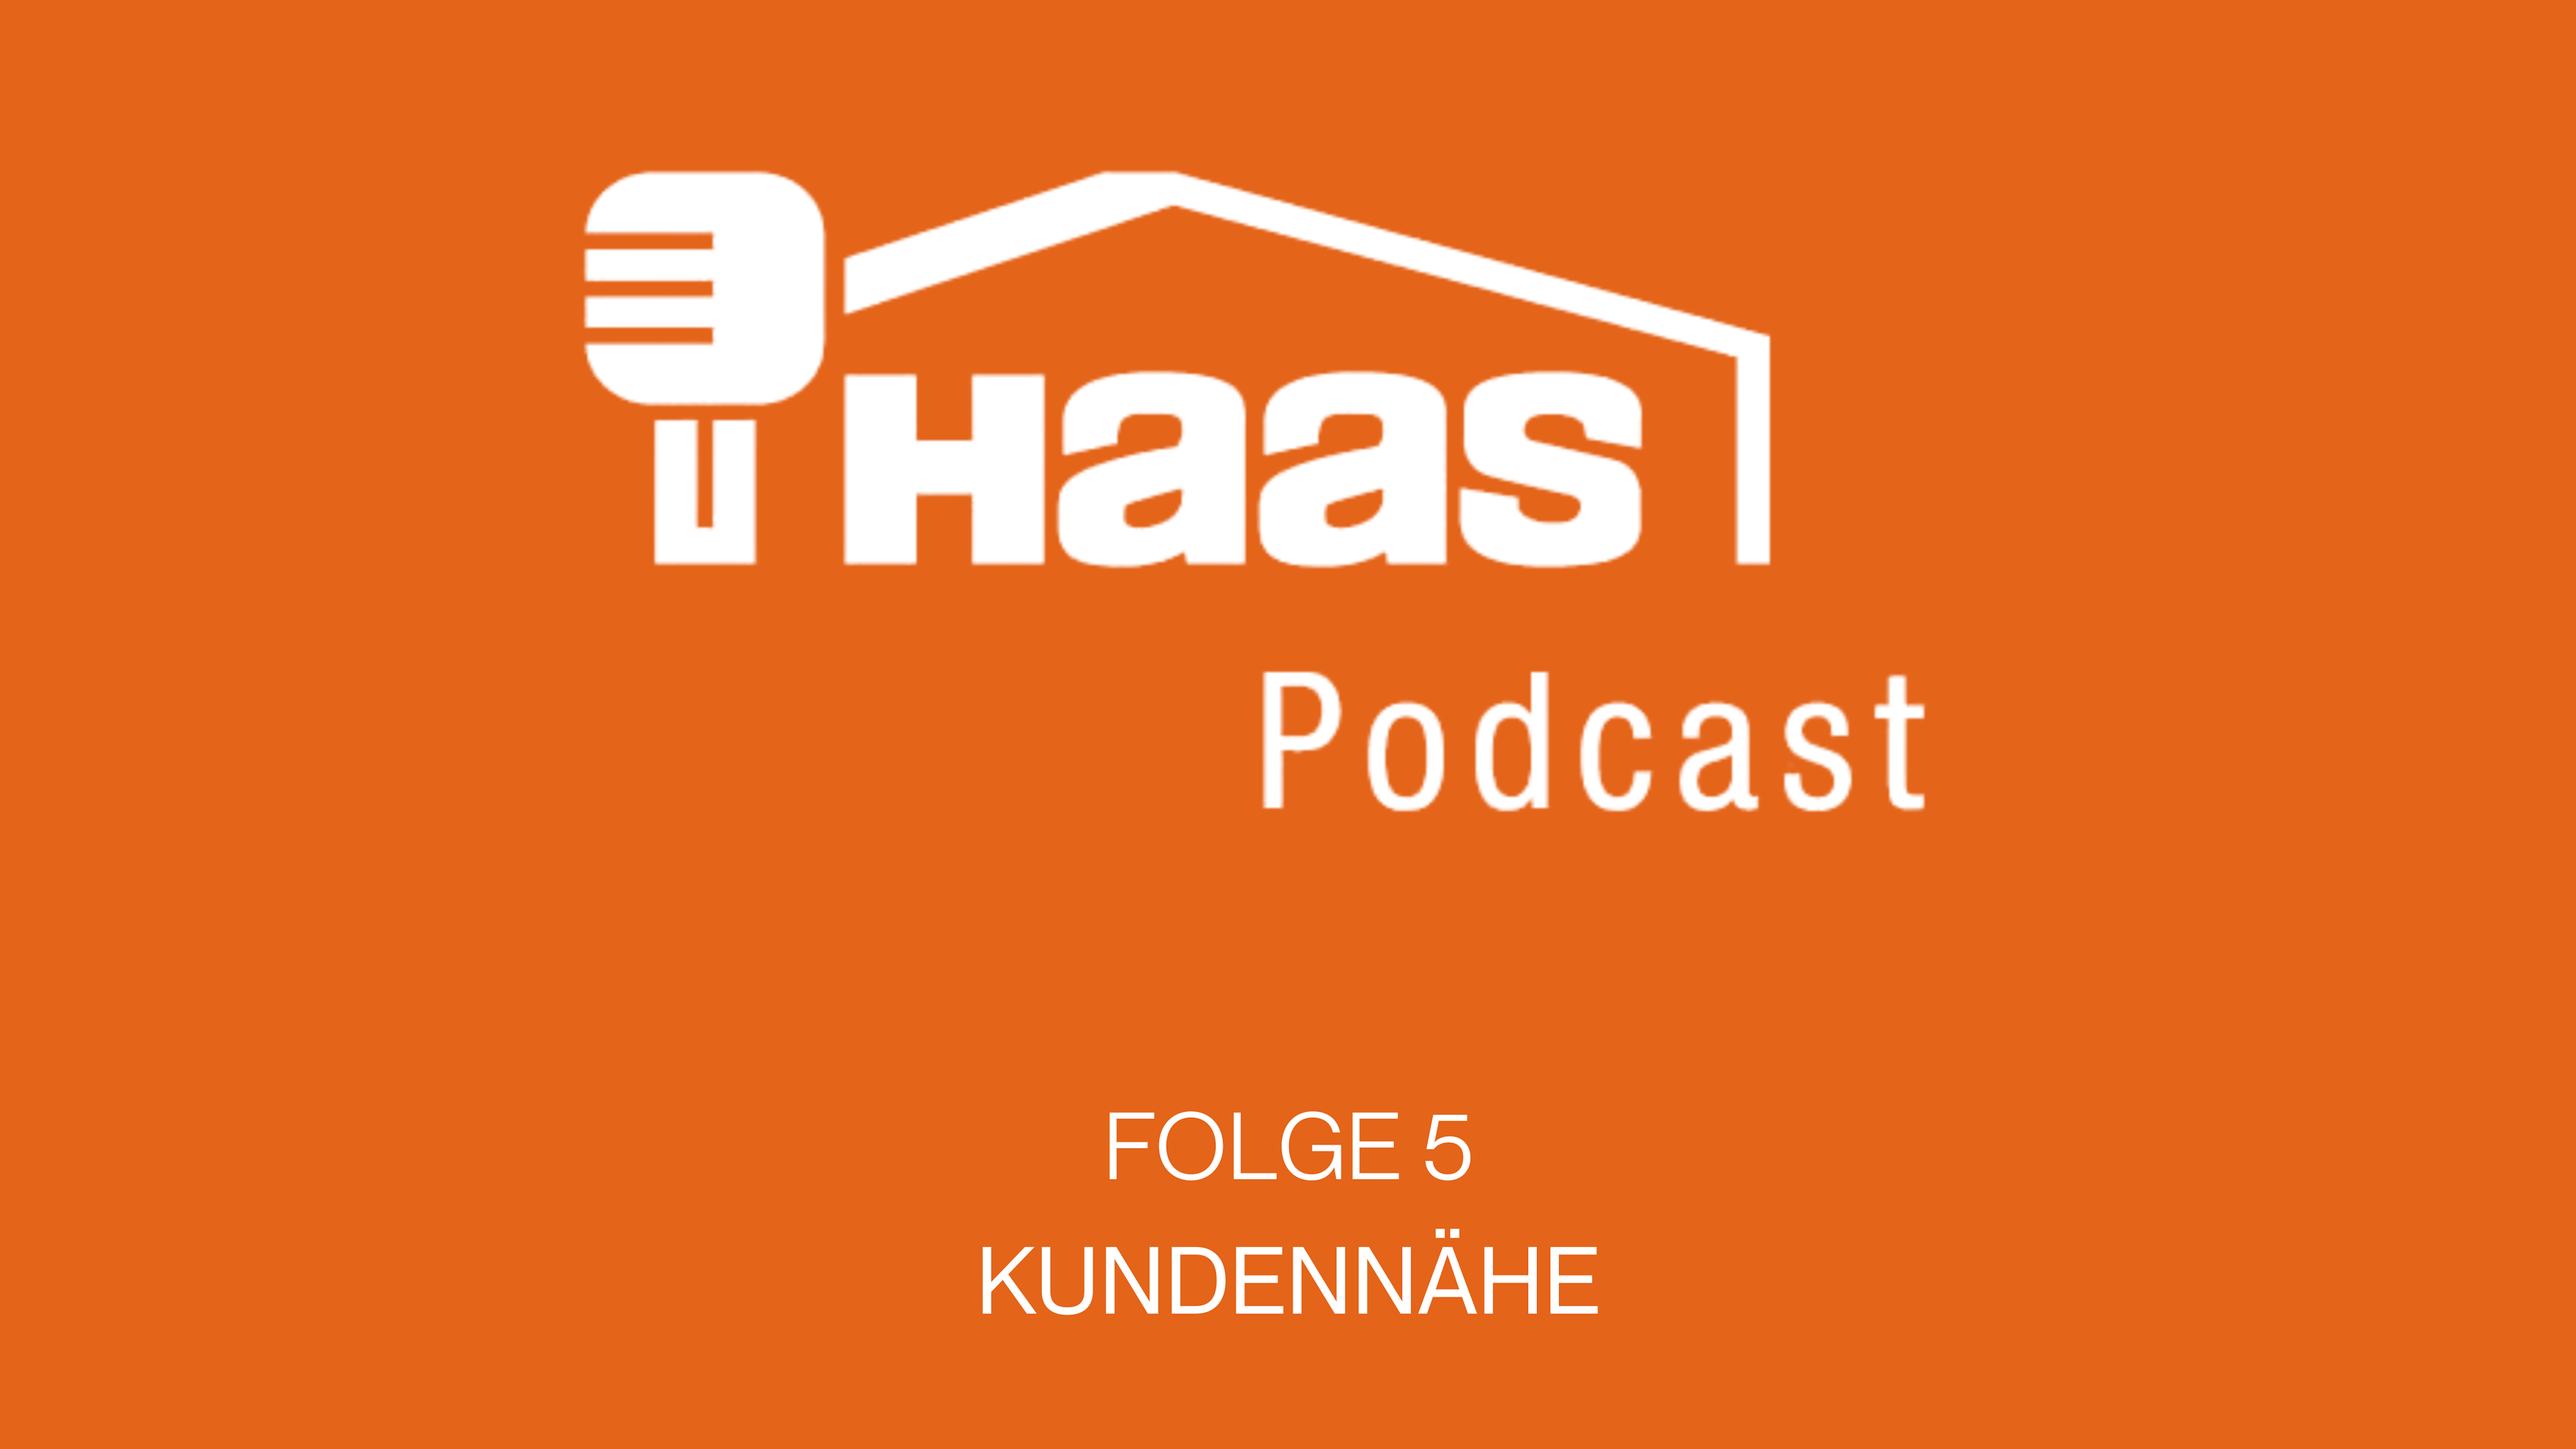 Haas Fertigbau Podcast aus einem Holz geschnitzt Folge 5